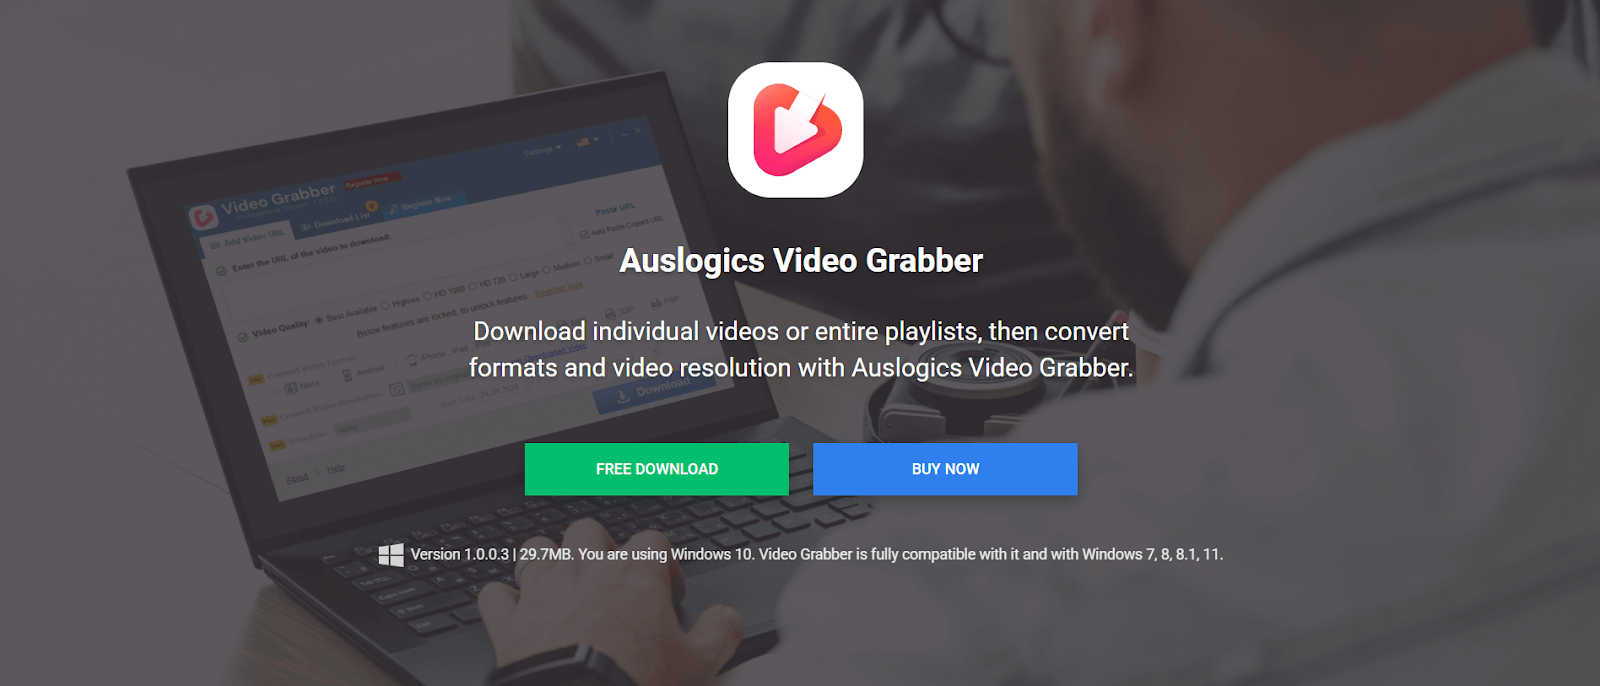 Auslogics Video Grabber Pro 1.0.0.4 download the new version for windows